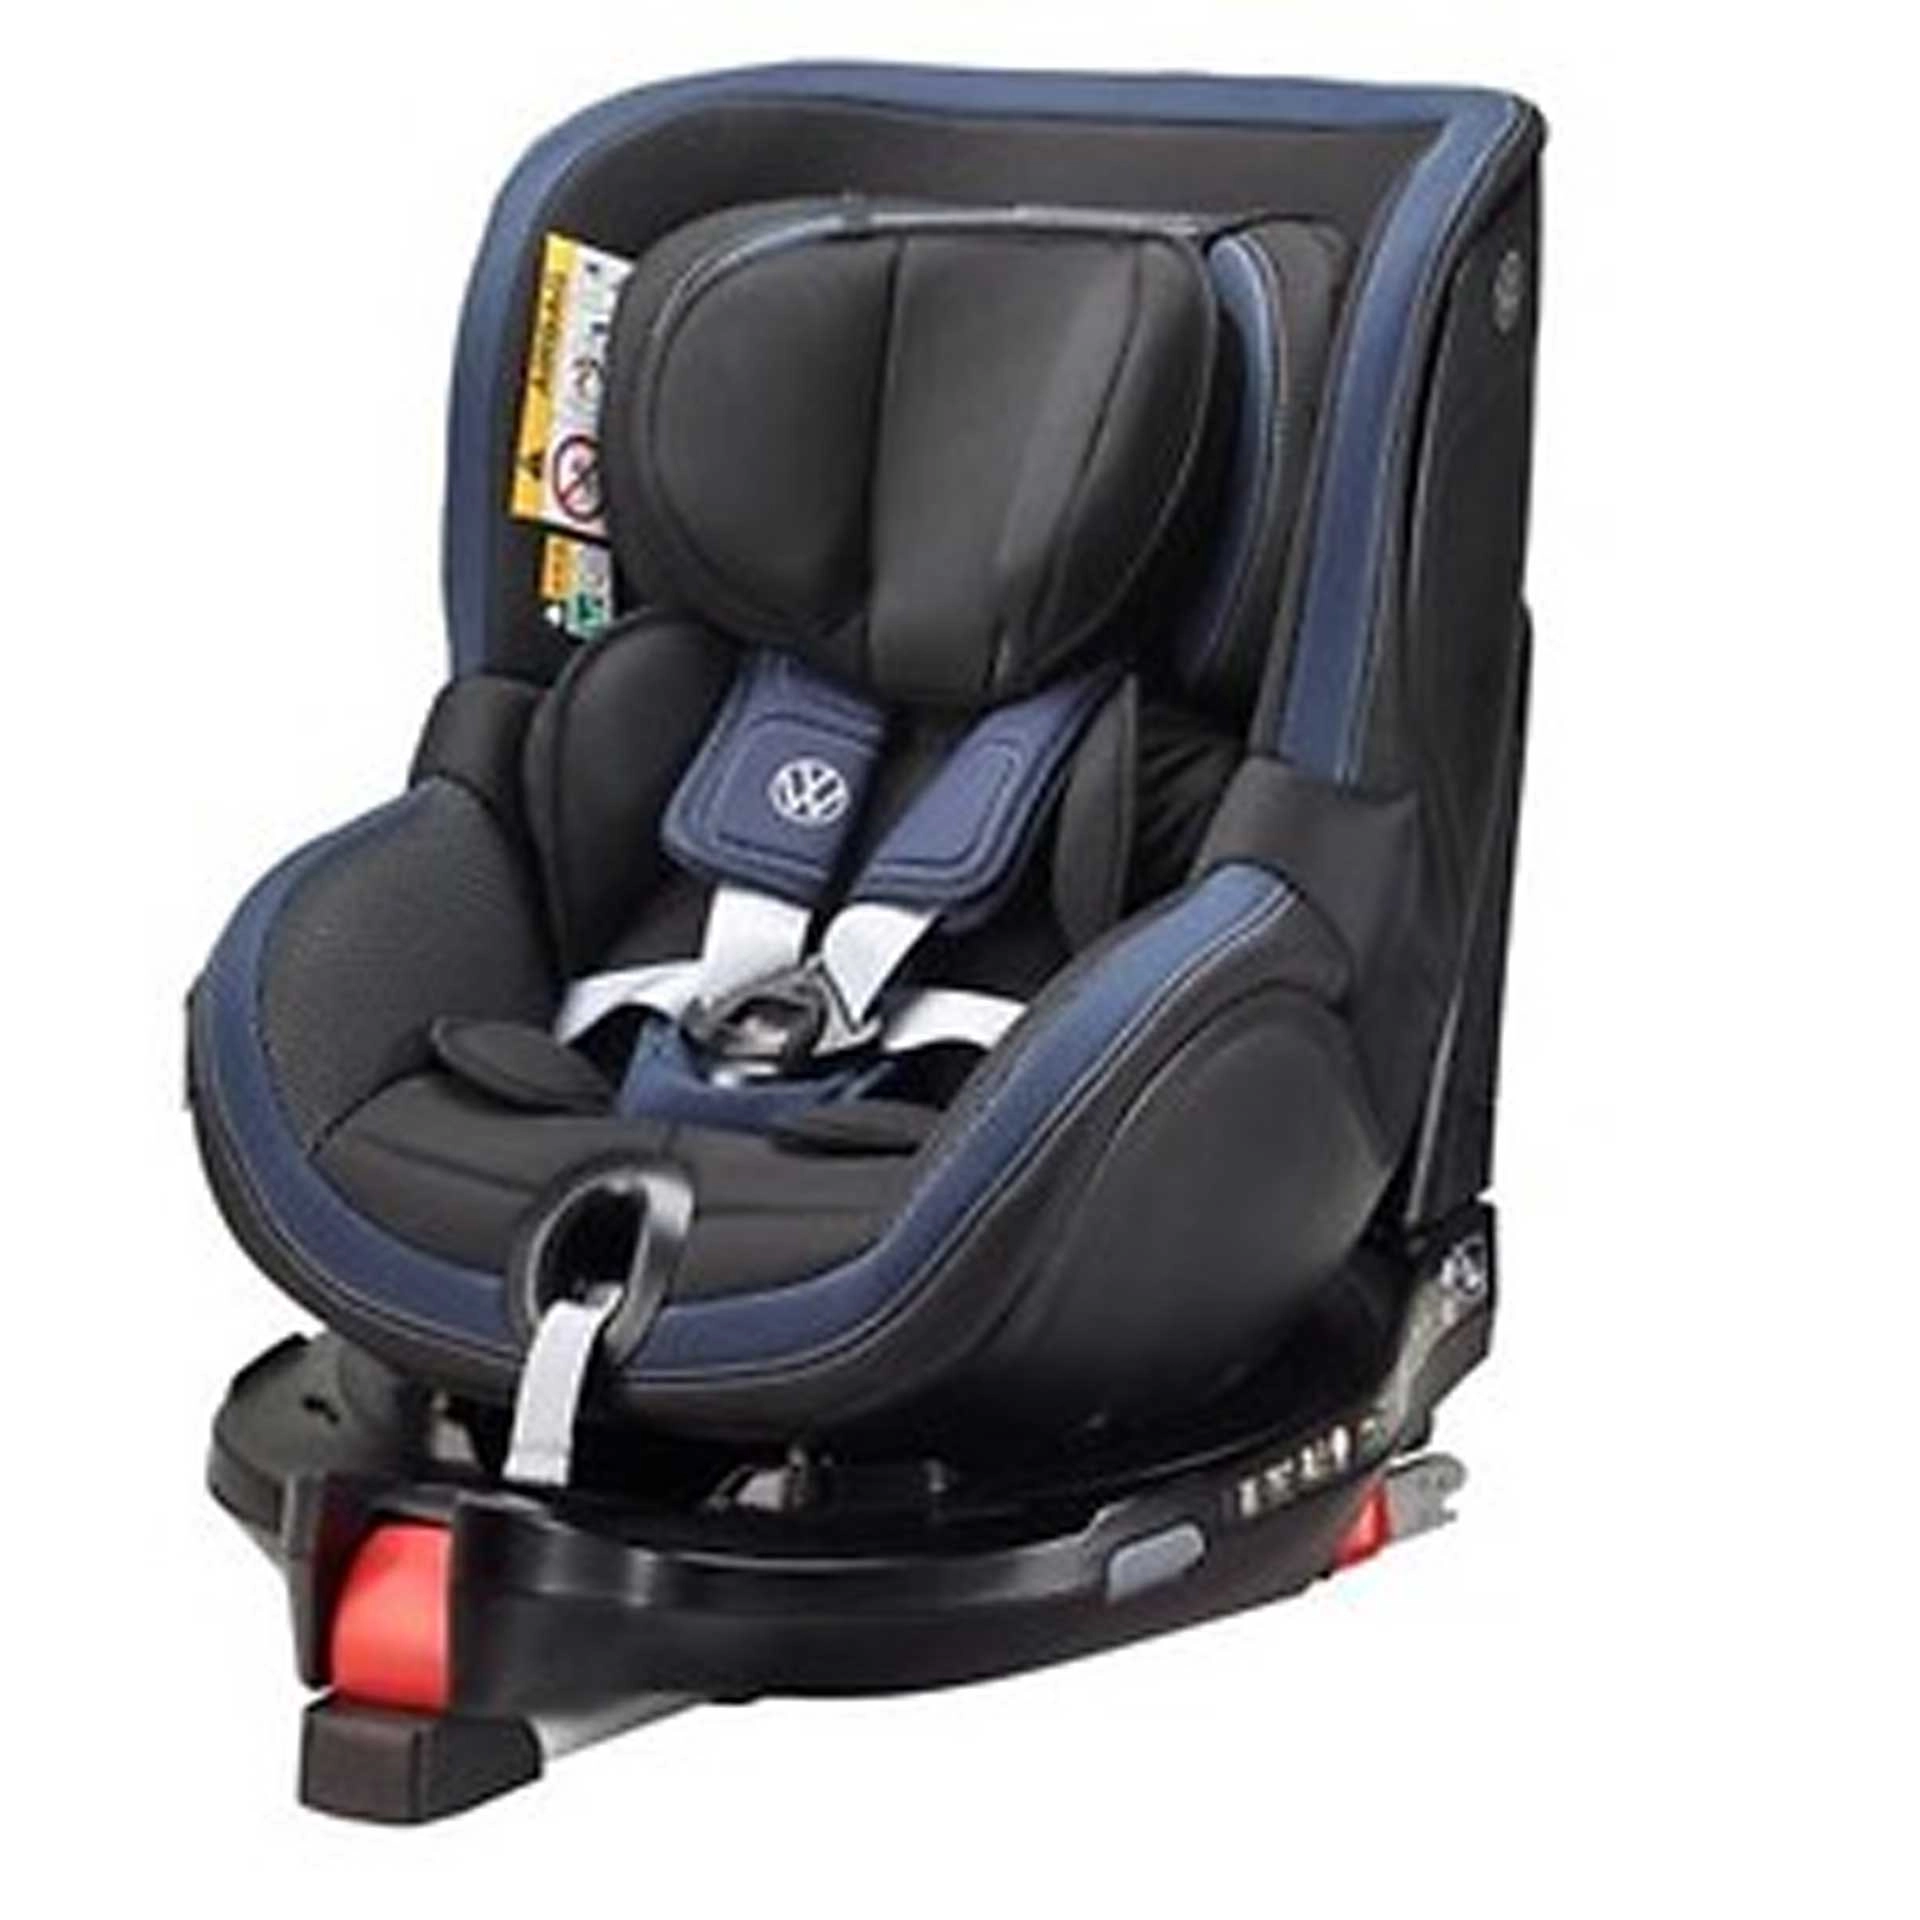 Volkswagen Kindersitz i-Size Dualfix Kinder bis 48 Monate 105 cm 18 kg 11A019902